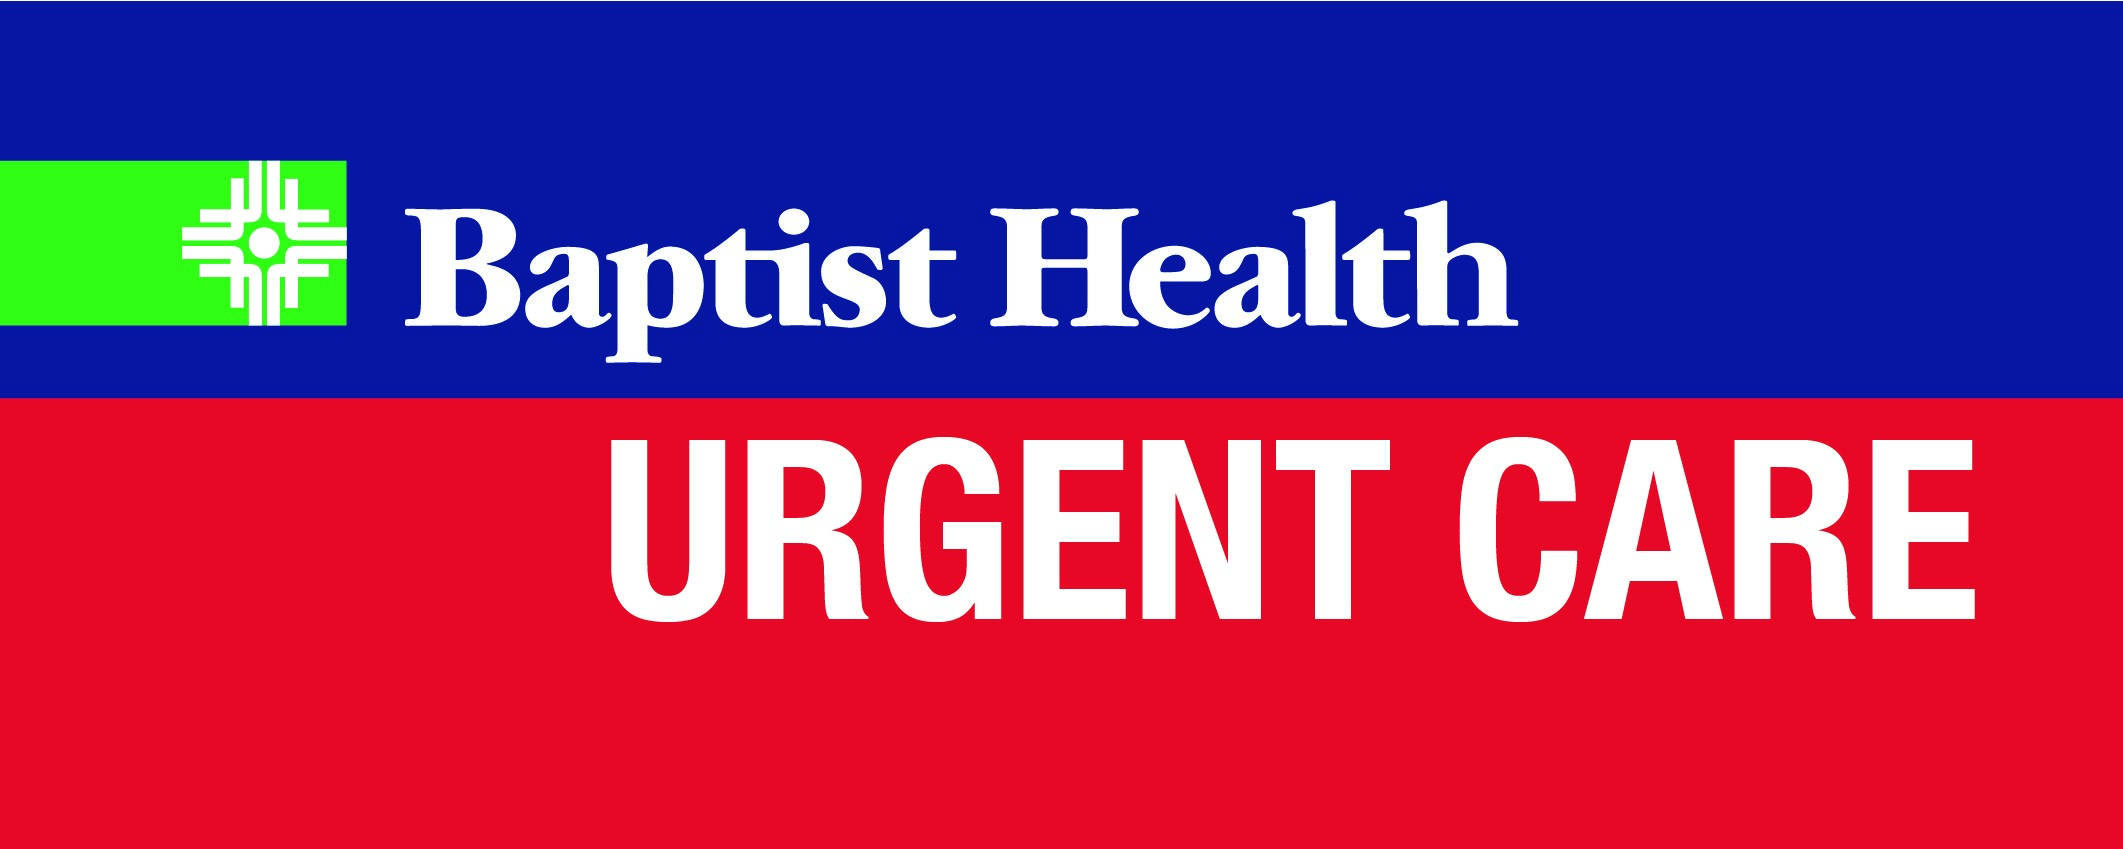 Baptist Health Urgent Care - Little Rock Logo